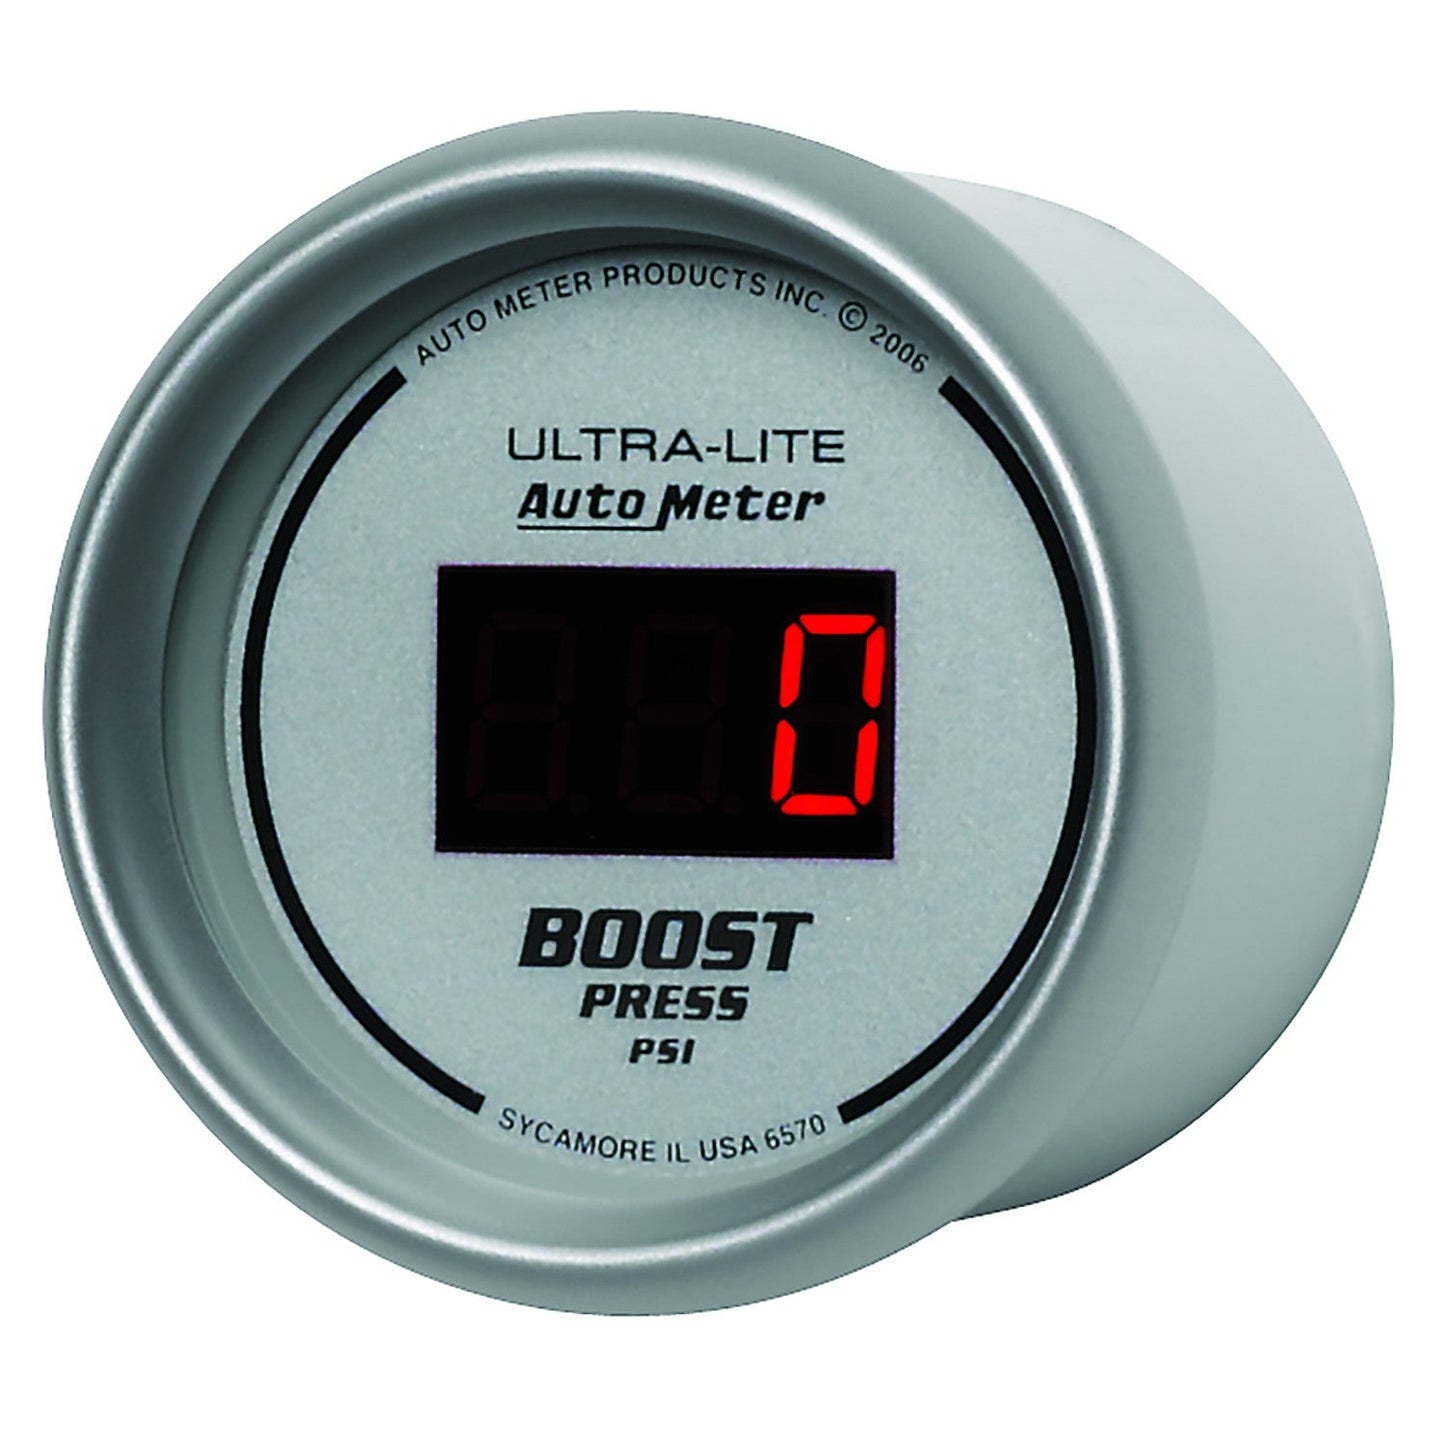 AutoMeter - 2-1/16" BOOST, 5-60 PSI, ULTRA-LITE DIGITAL (6570)